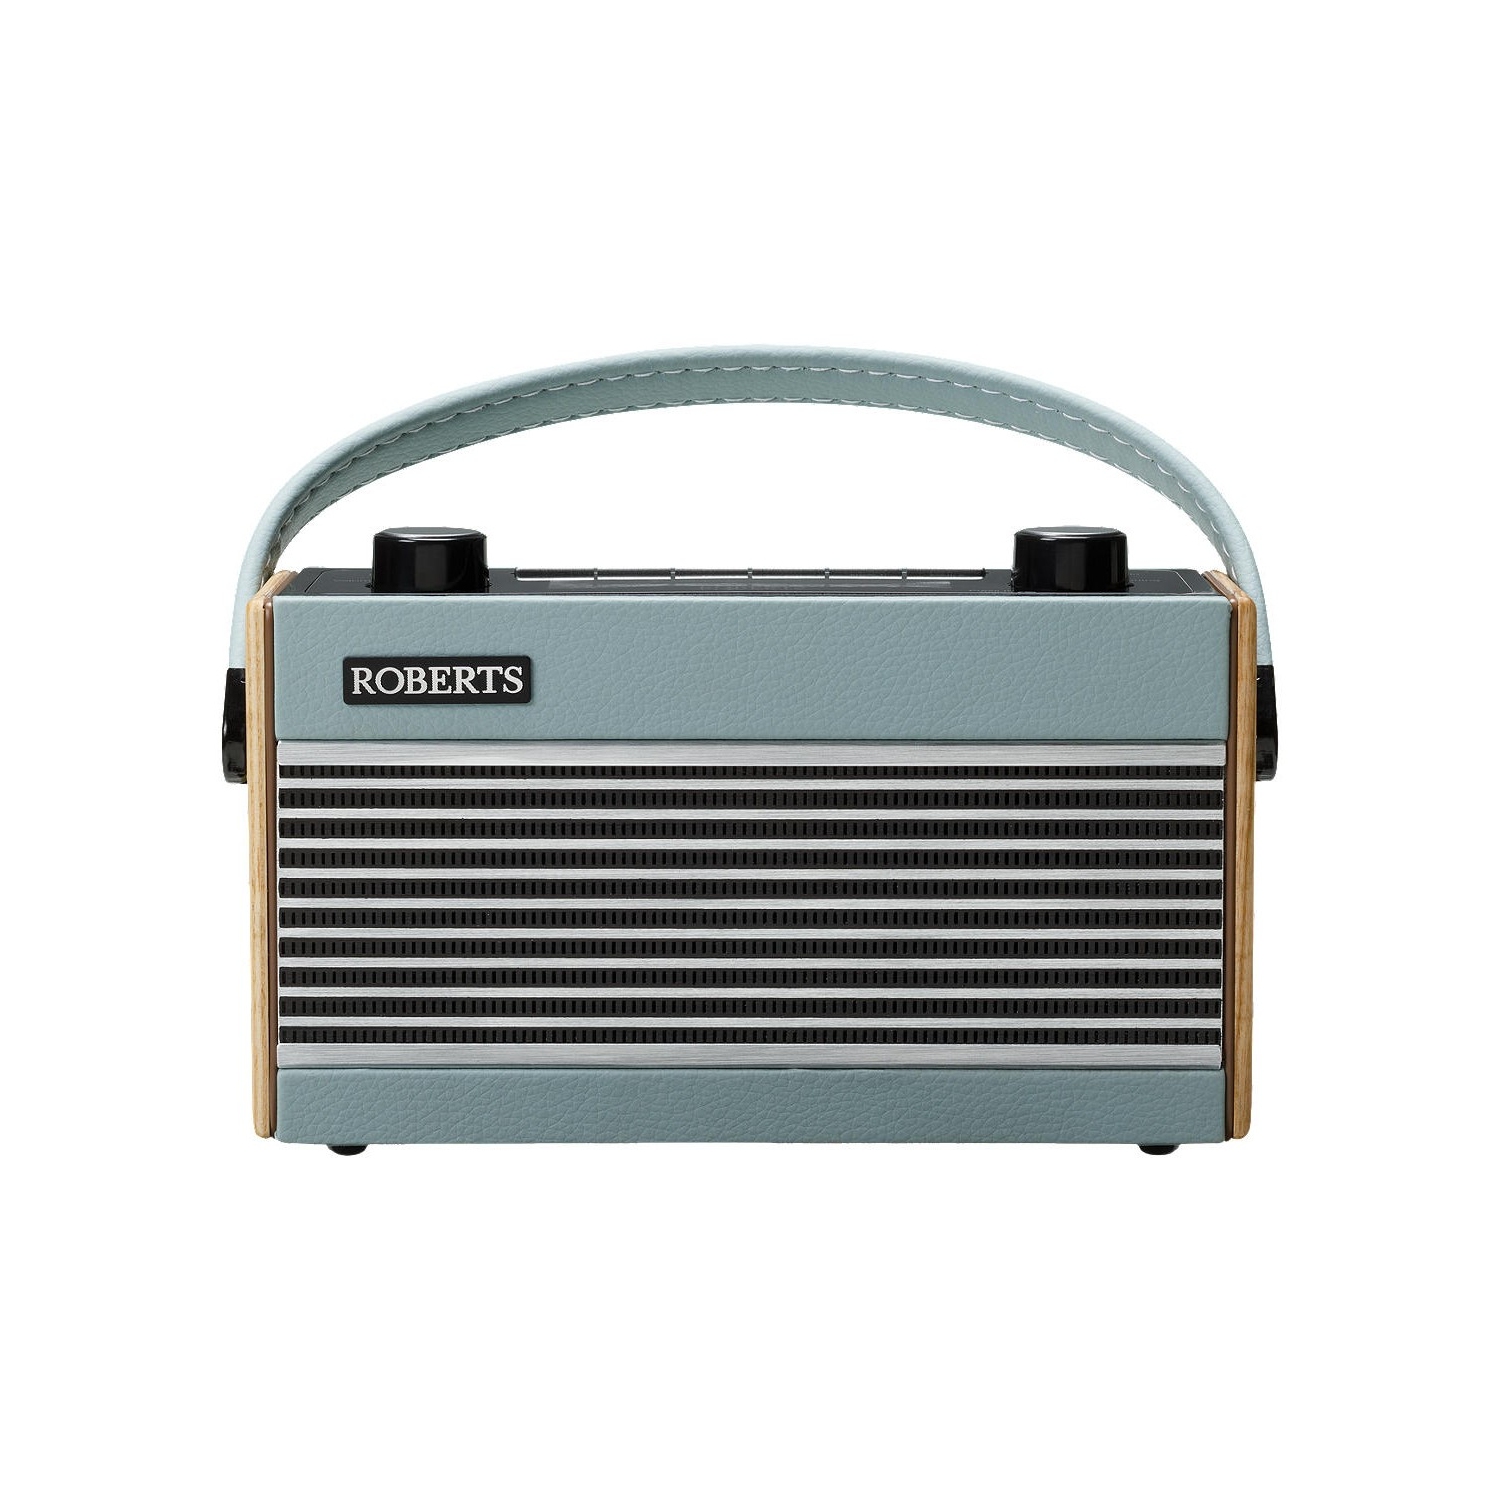 Roberts Radio Retro style dab/fm radio with bluetooth (blue)